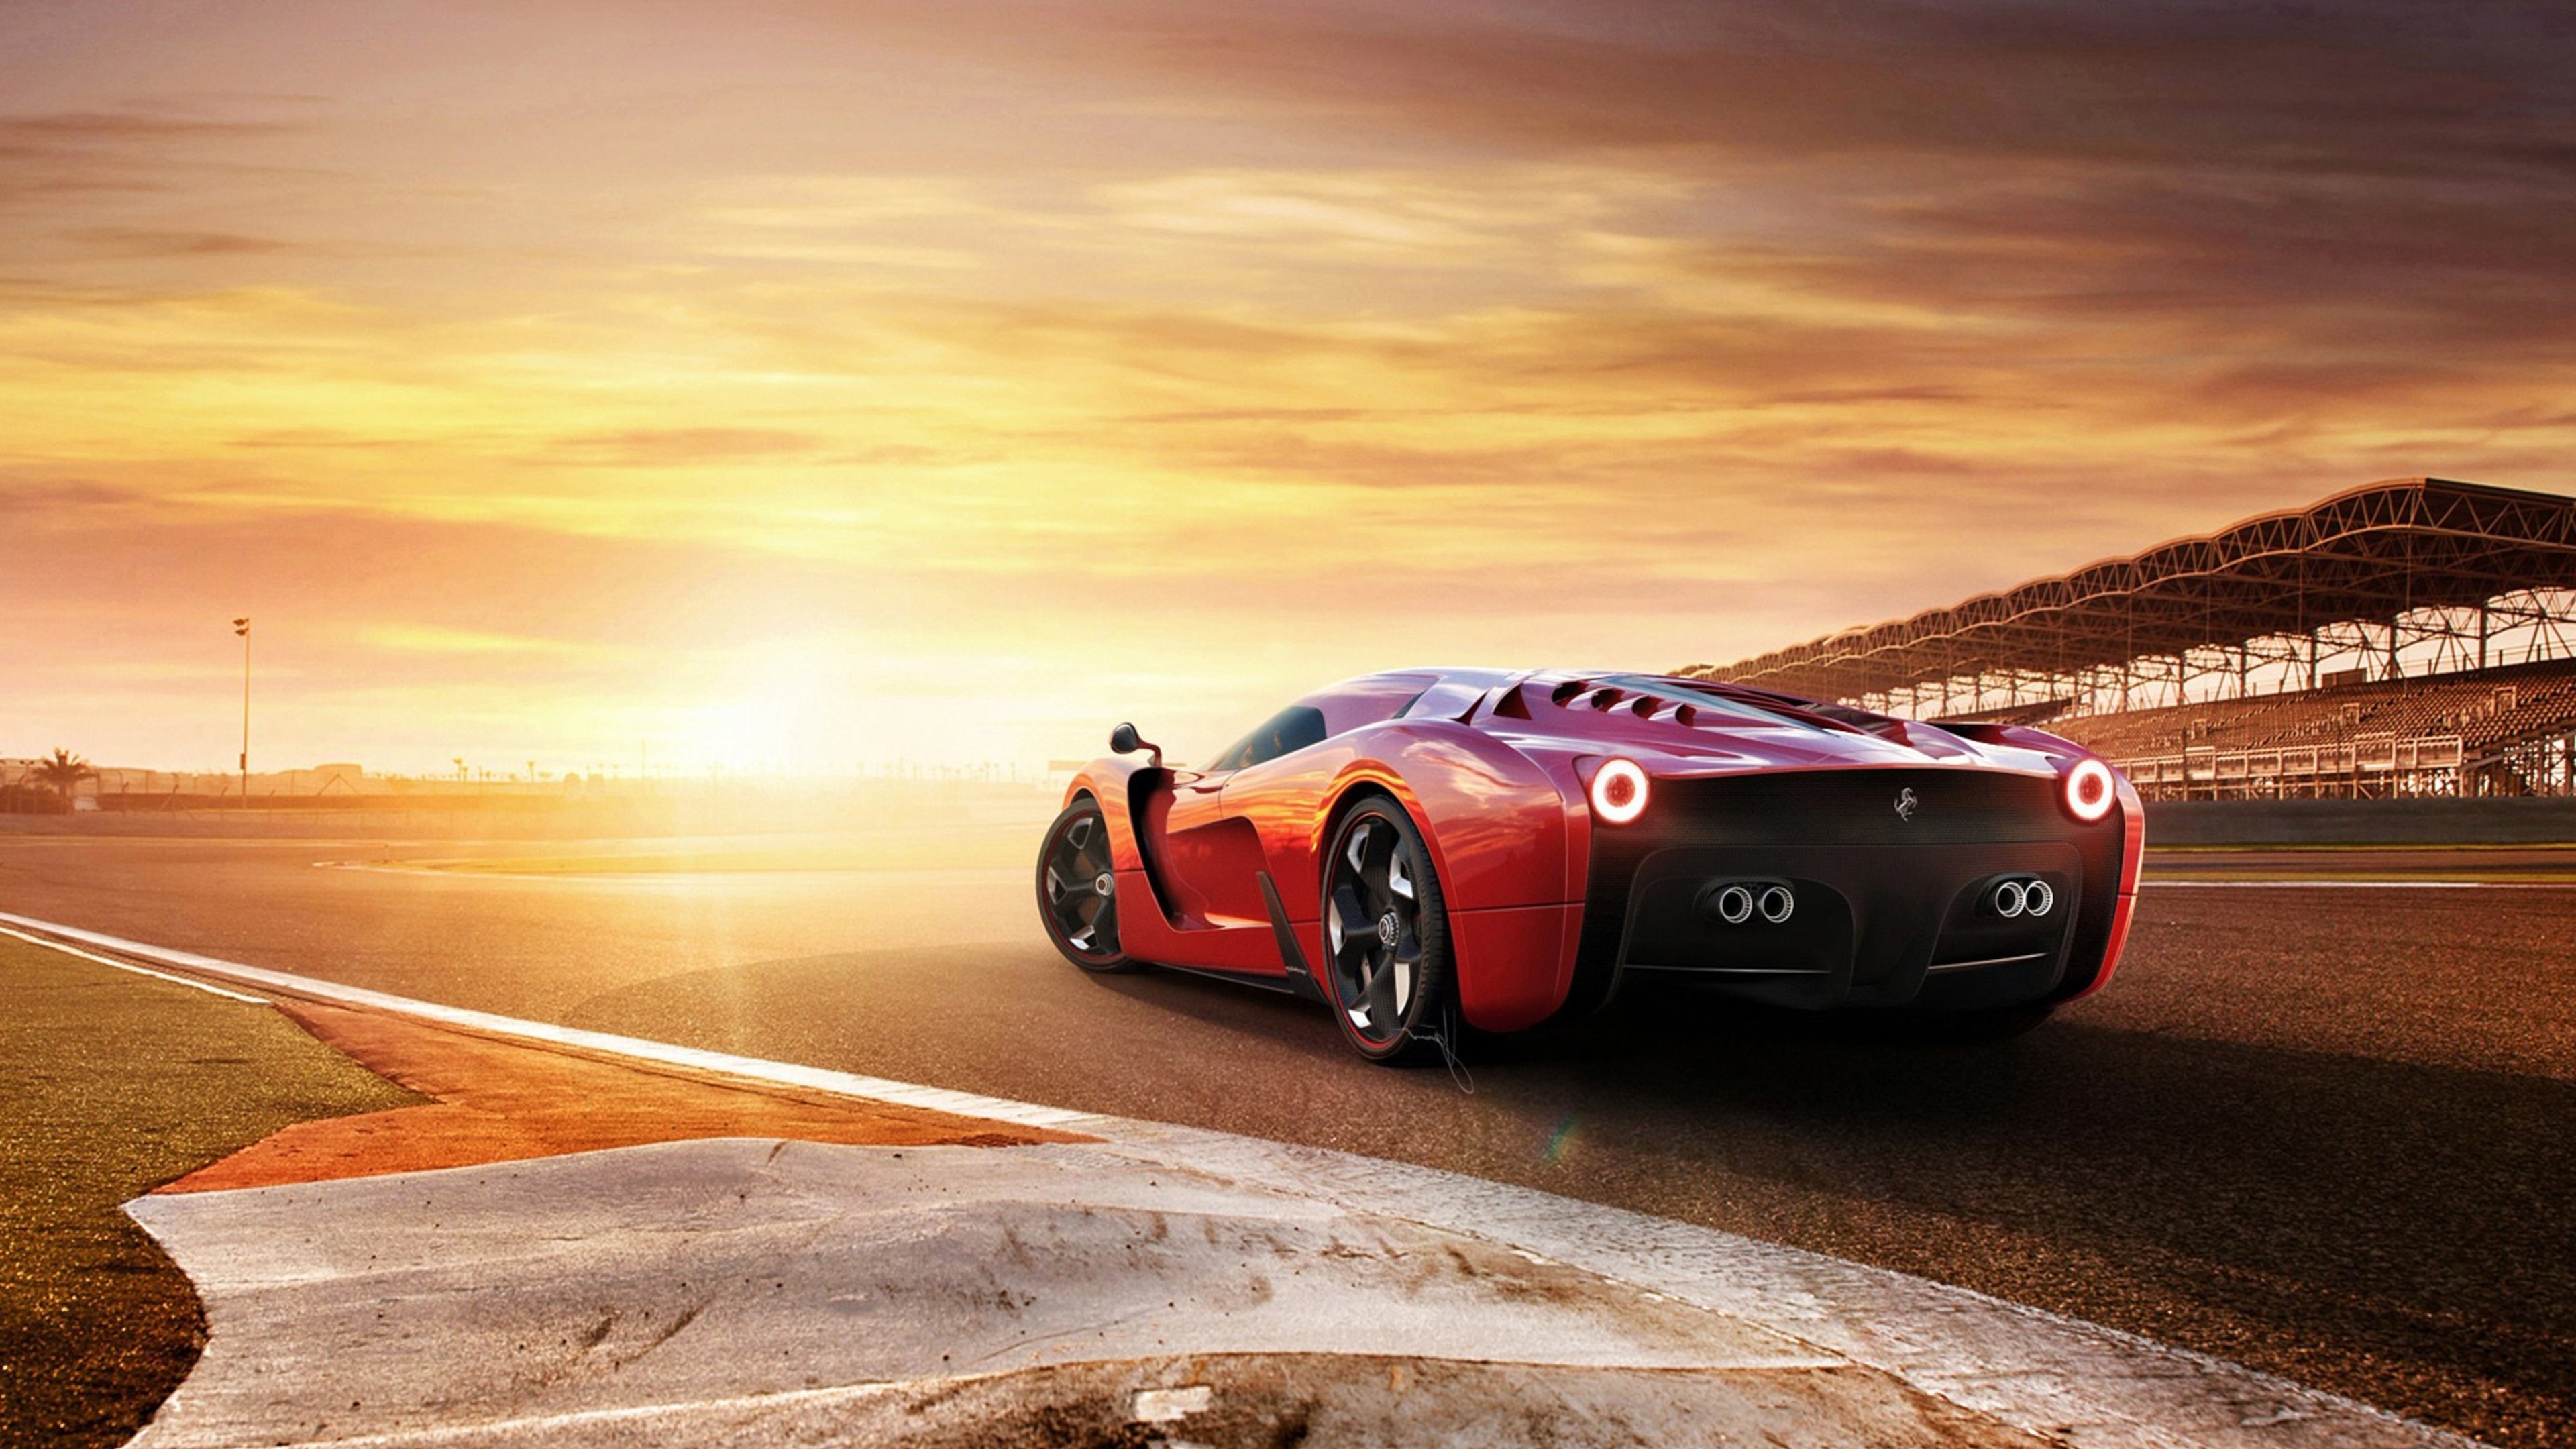 Ferrari 458 Concept Car, HD Cars, 4k Wallpapers, Images, Backgrounds